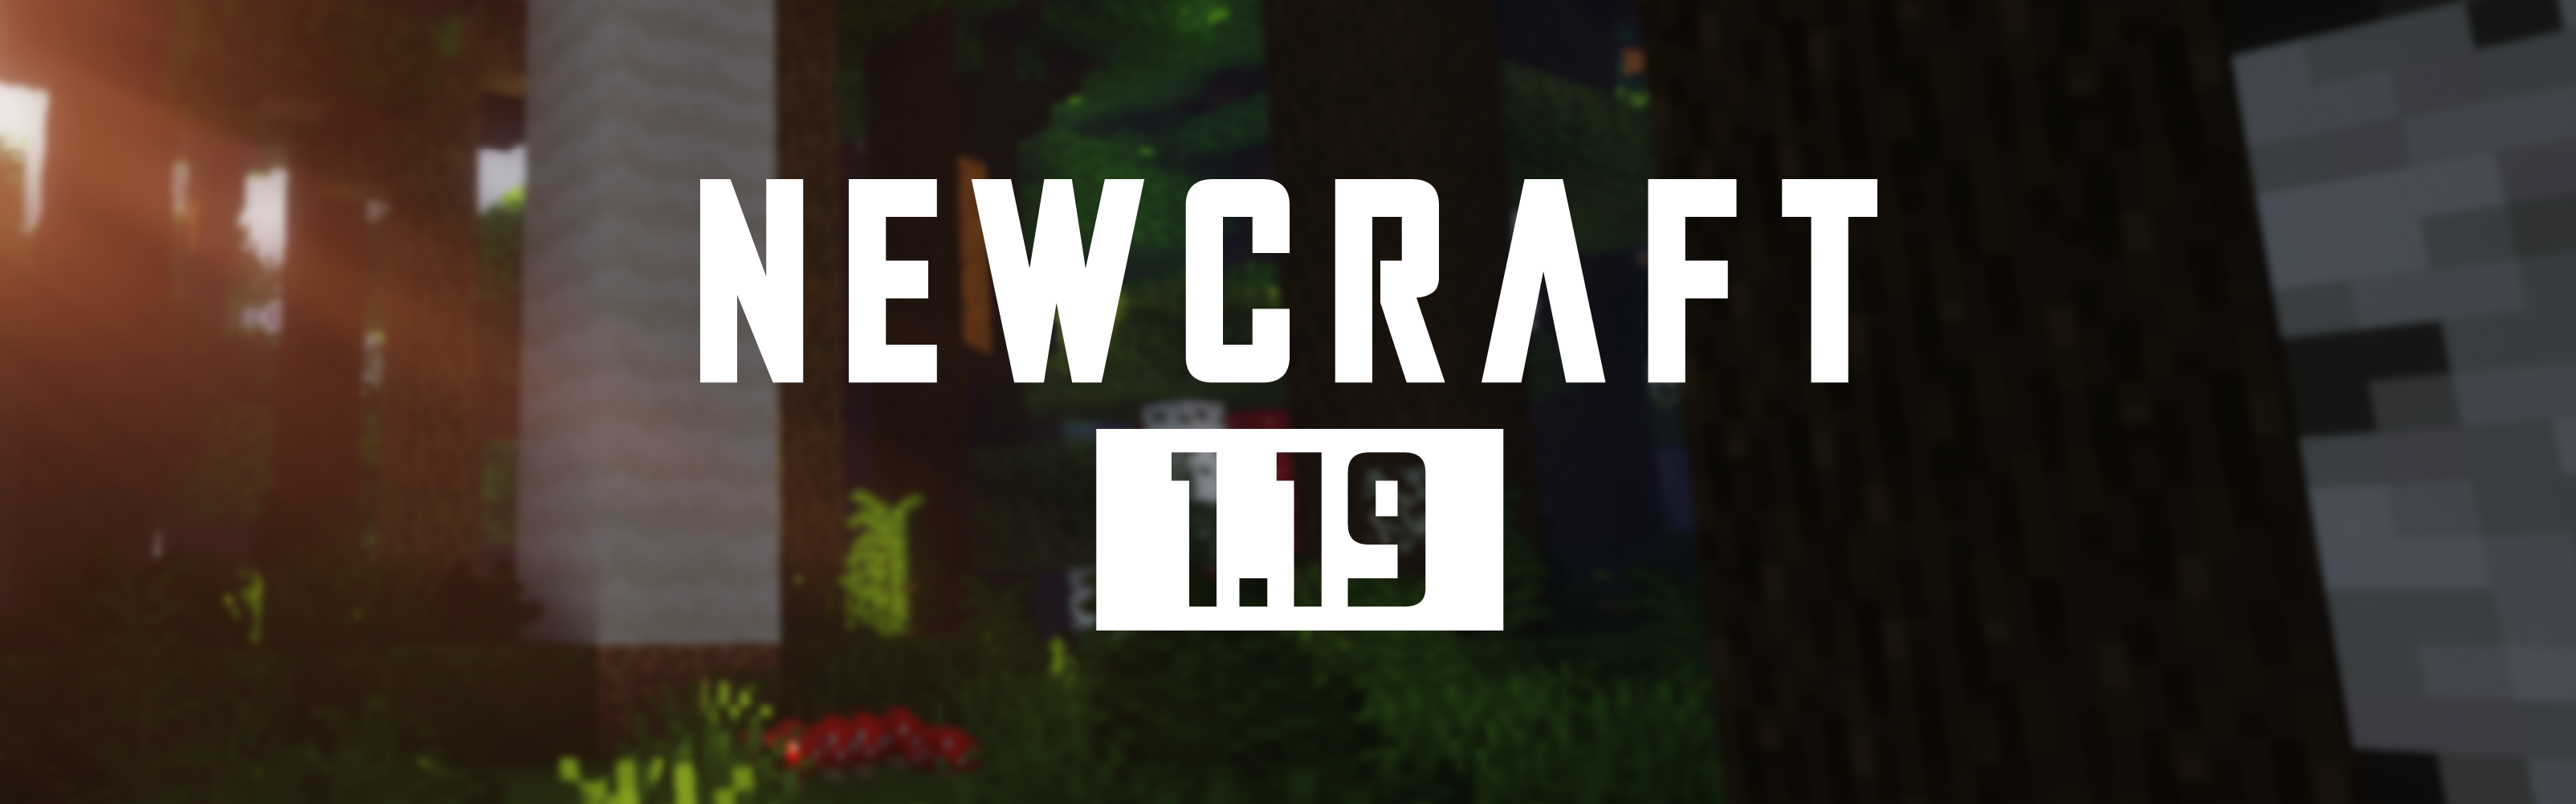 Crafty — What's new in Minecraft 1.19.3